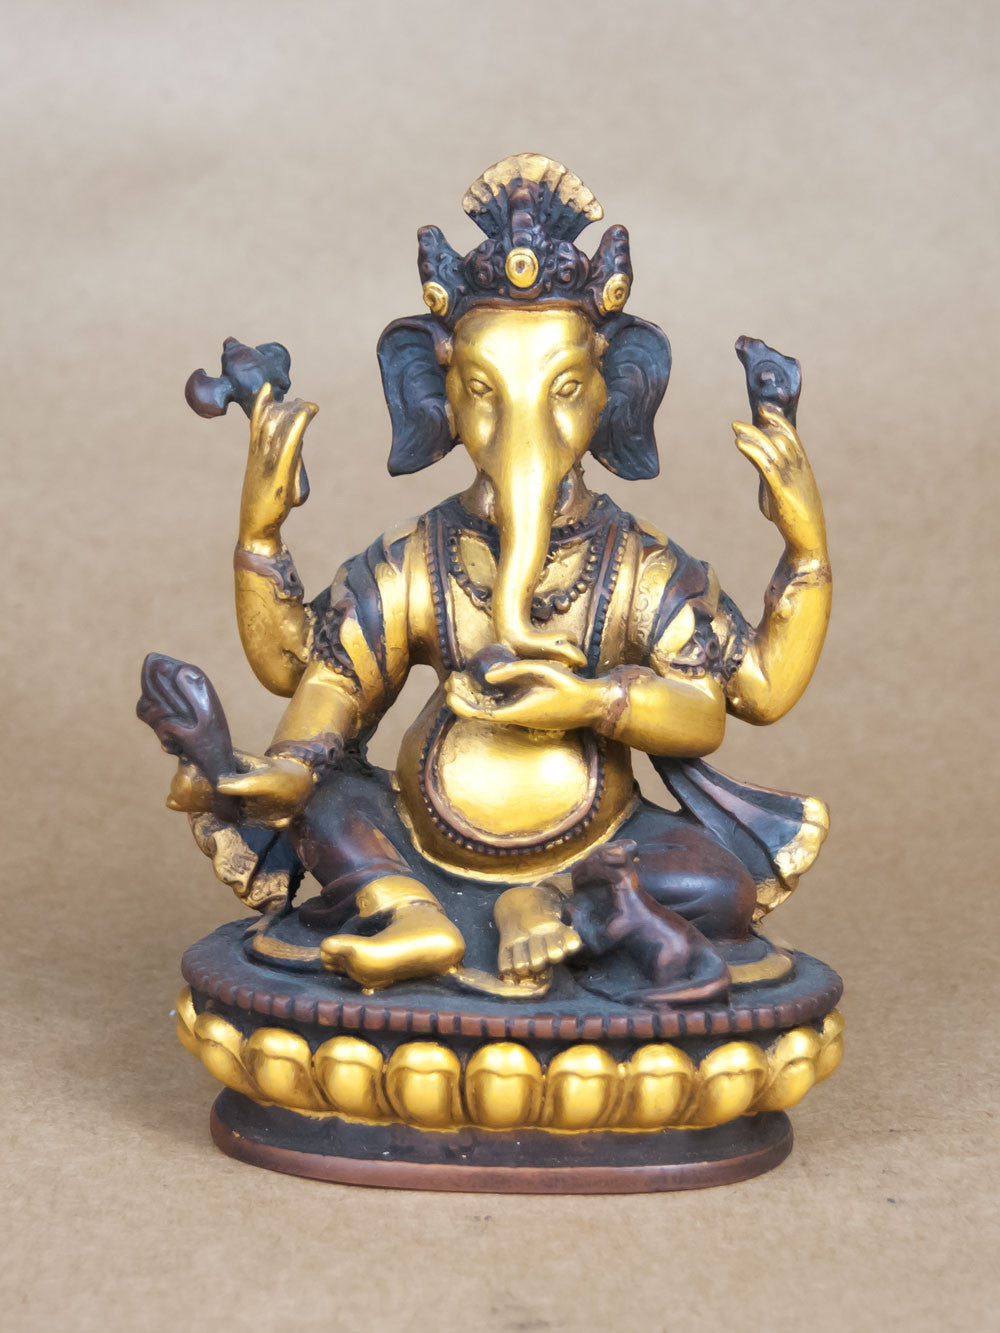 Statues - Large Ceramic Ganesha Statue